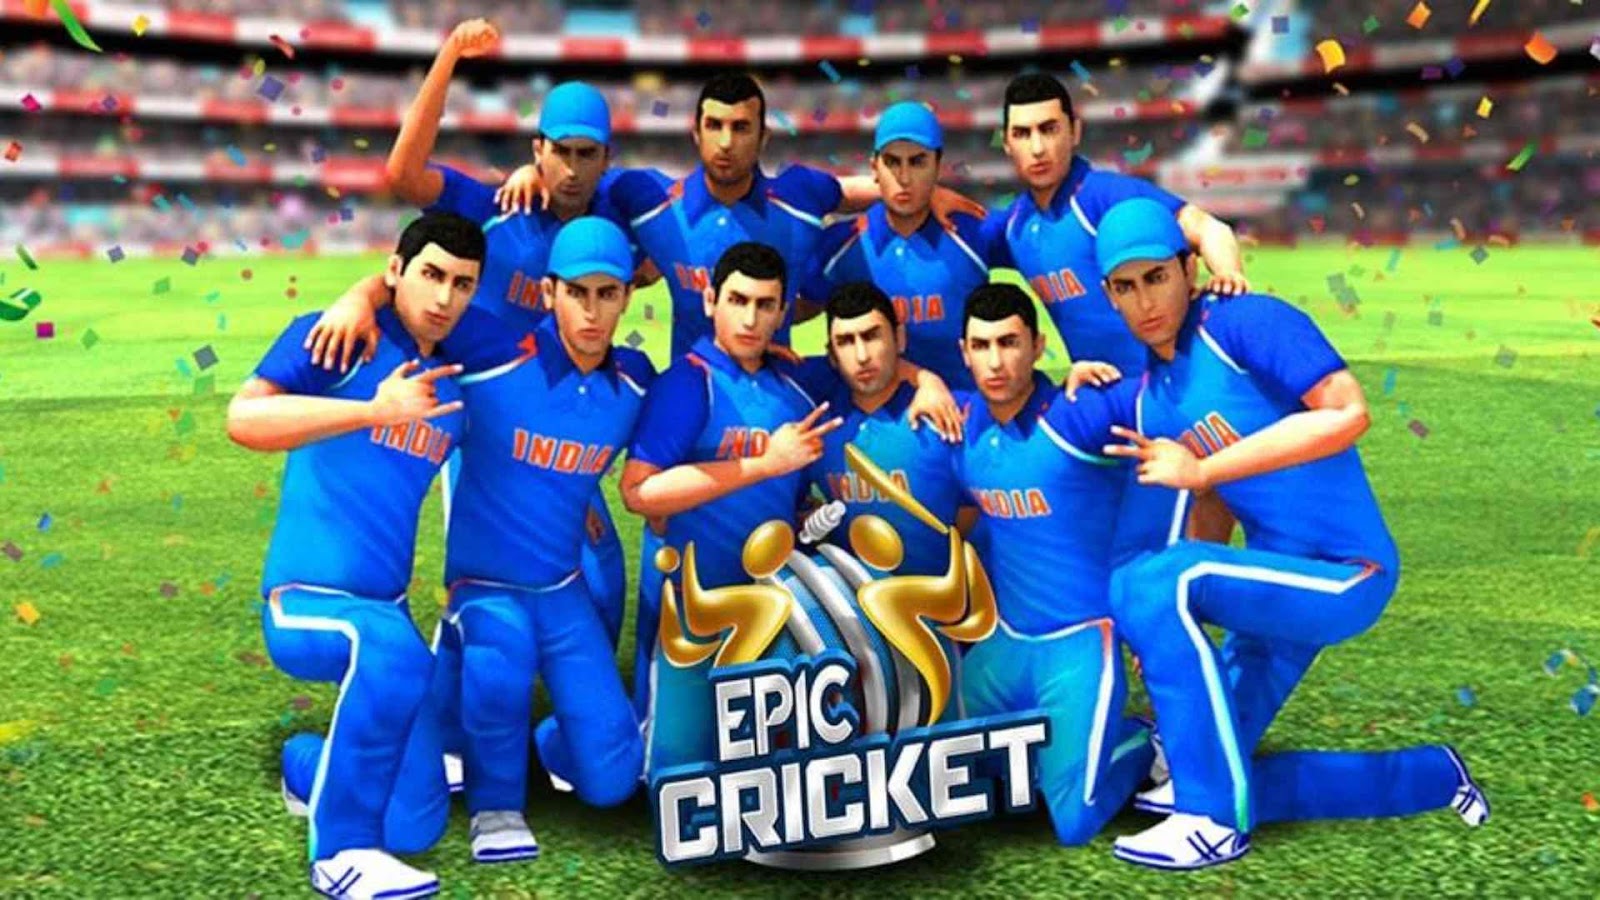 Epic Cricket